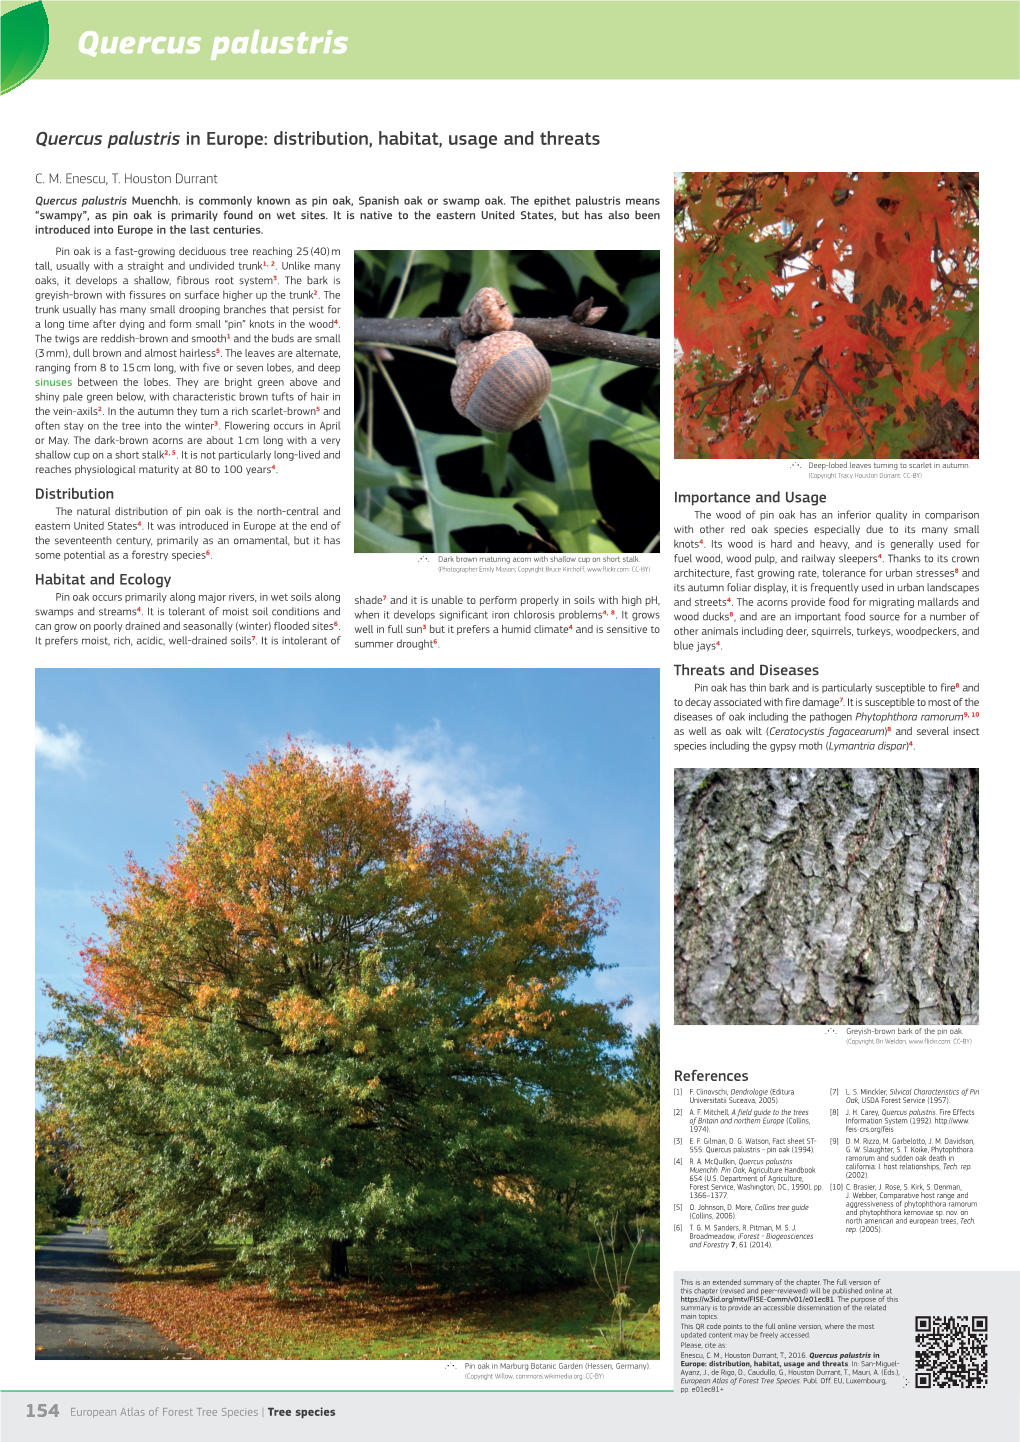 Quercus Palustris in Europe: Distribution, Habitat, Usage and Threats